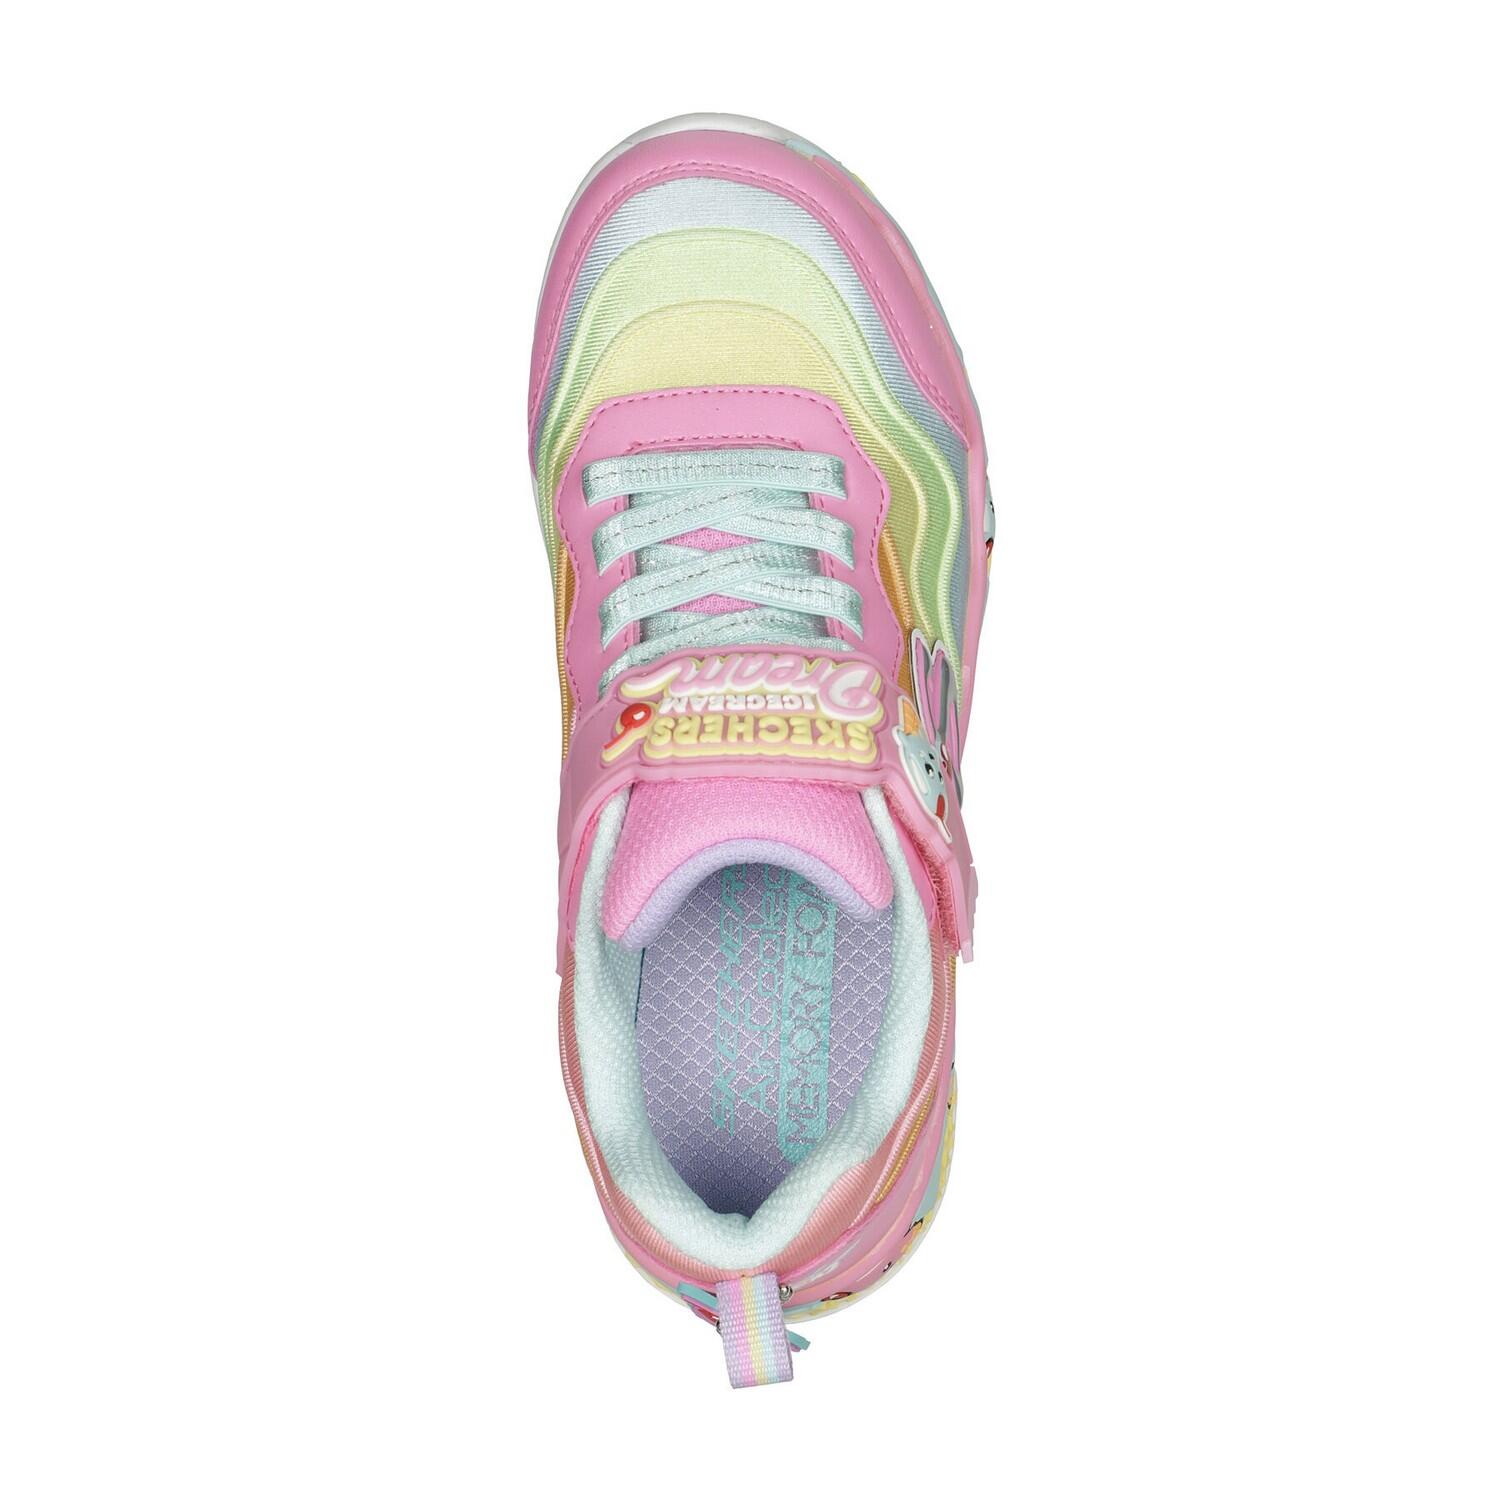 Girls Sundae Sweeties Trainers (Pink/Multicoloured) 4/5